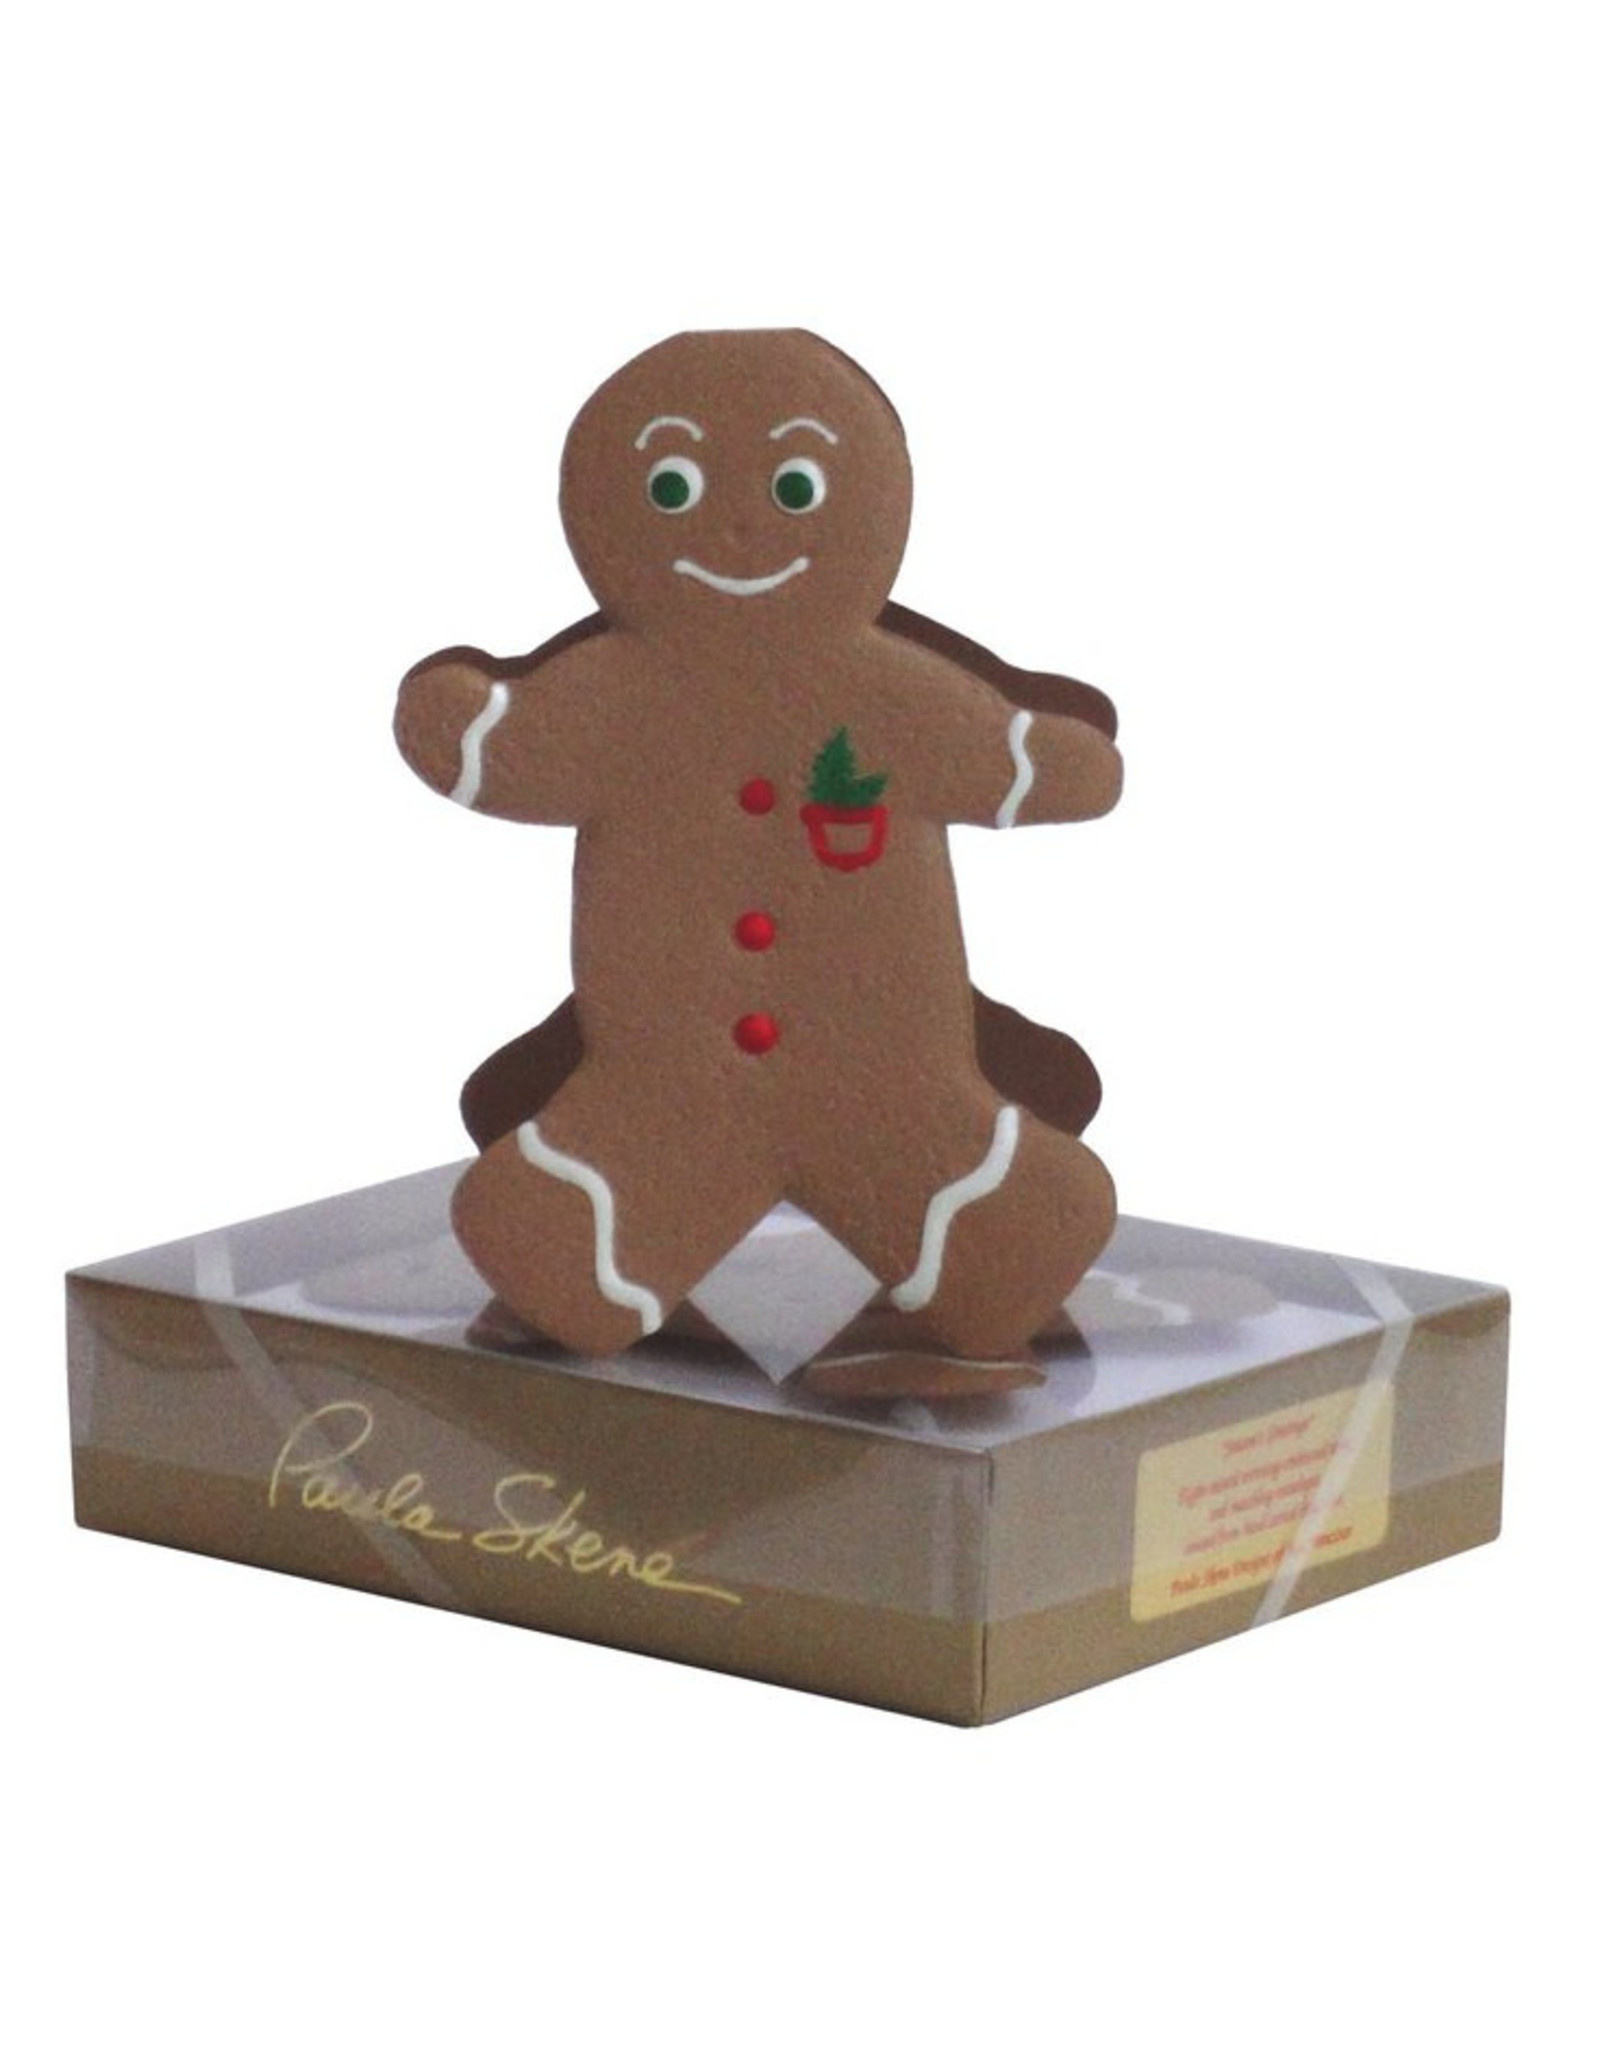 Paula Skene Designs Ginger Bread Man Christmas A6 Notecard